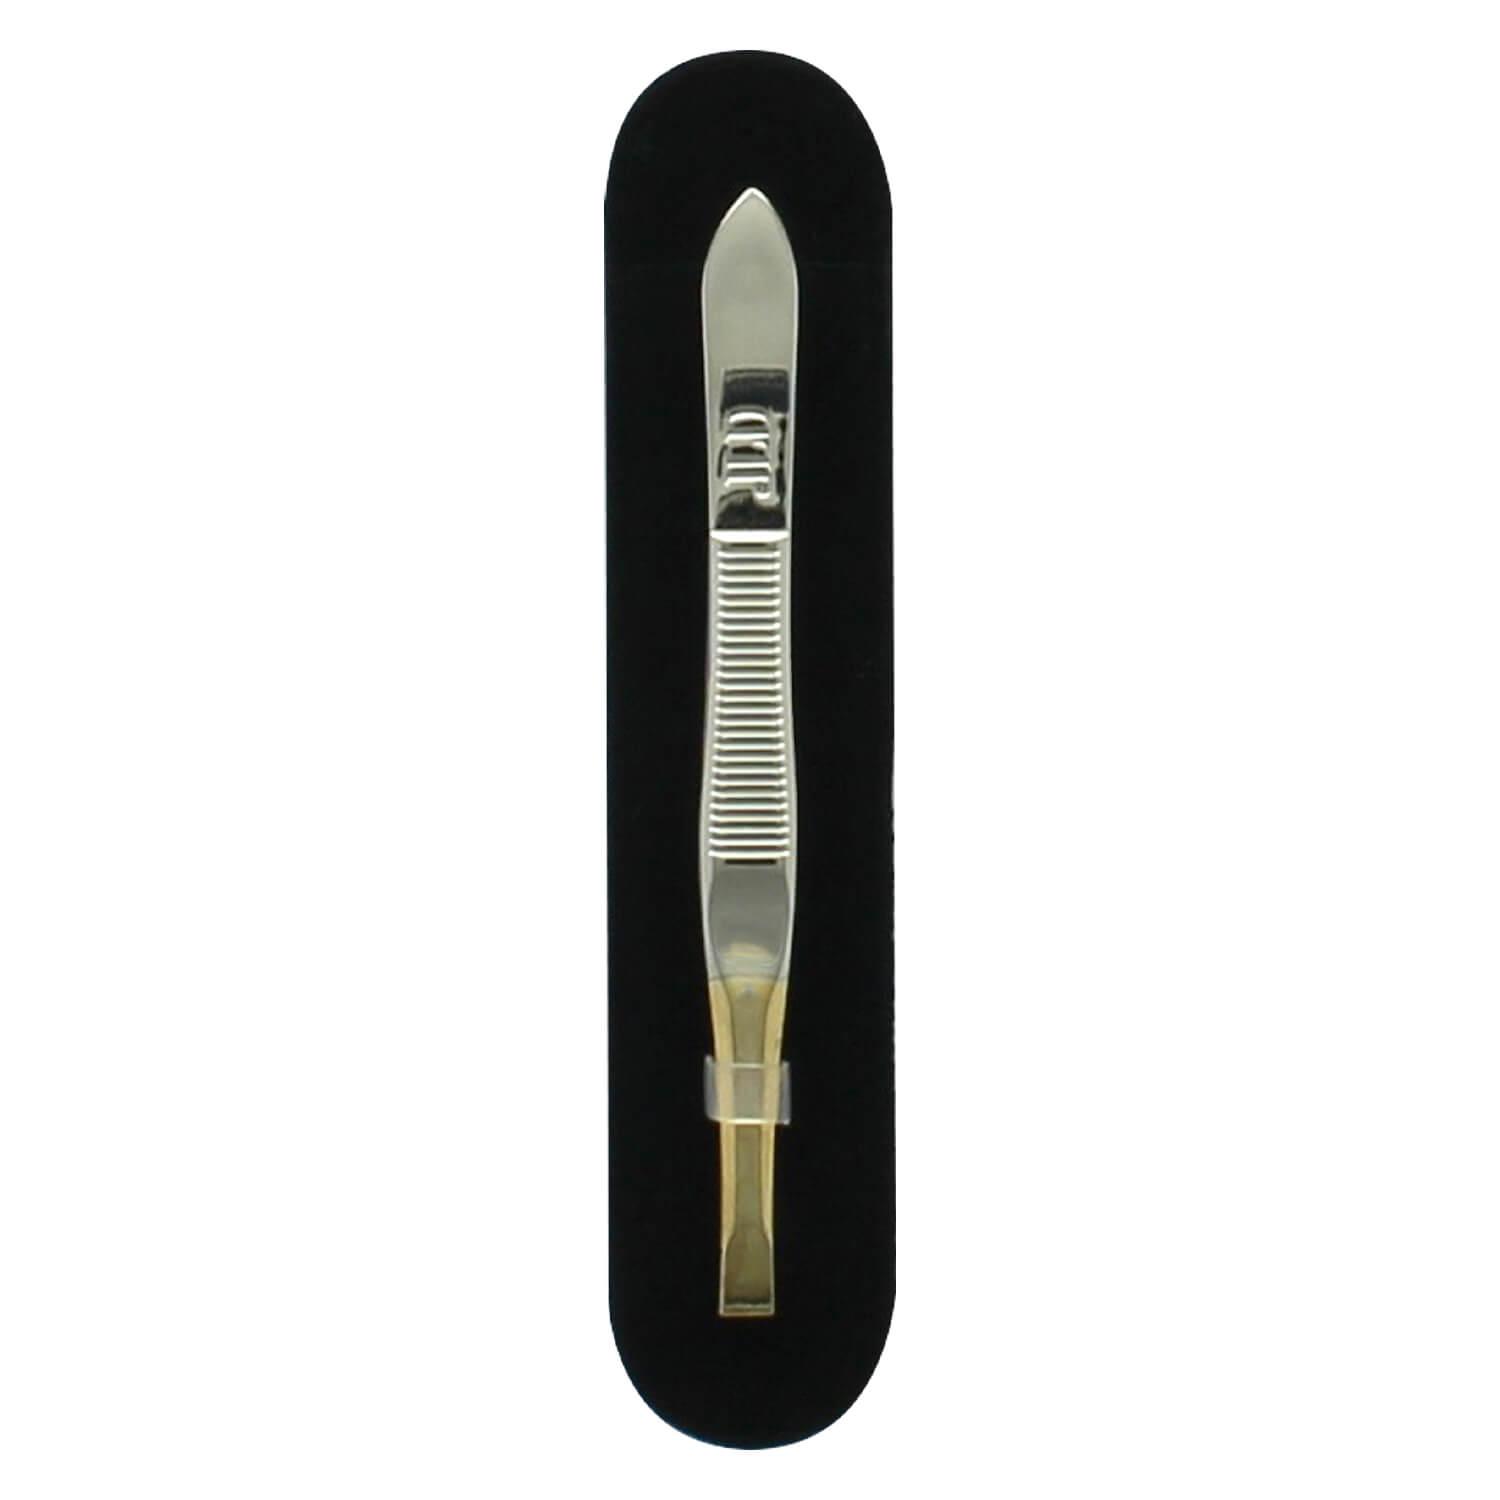 JLD - Professional straight tweezers with golden tip